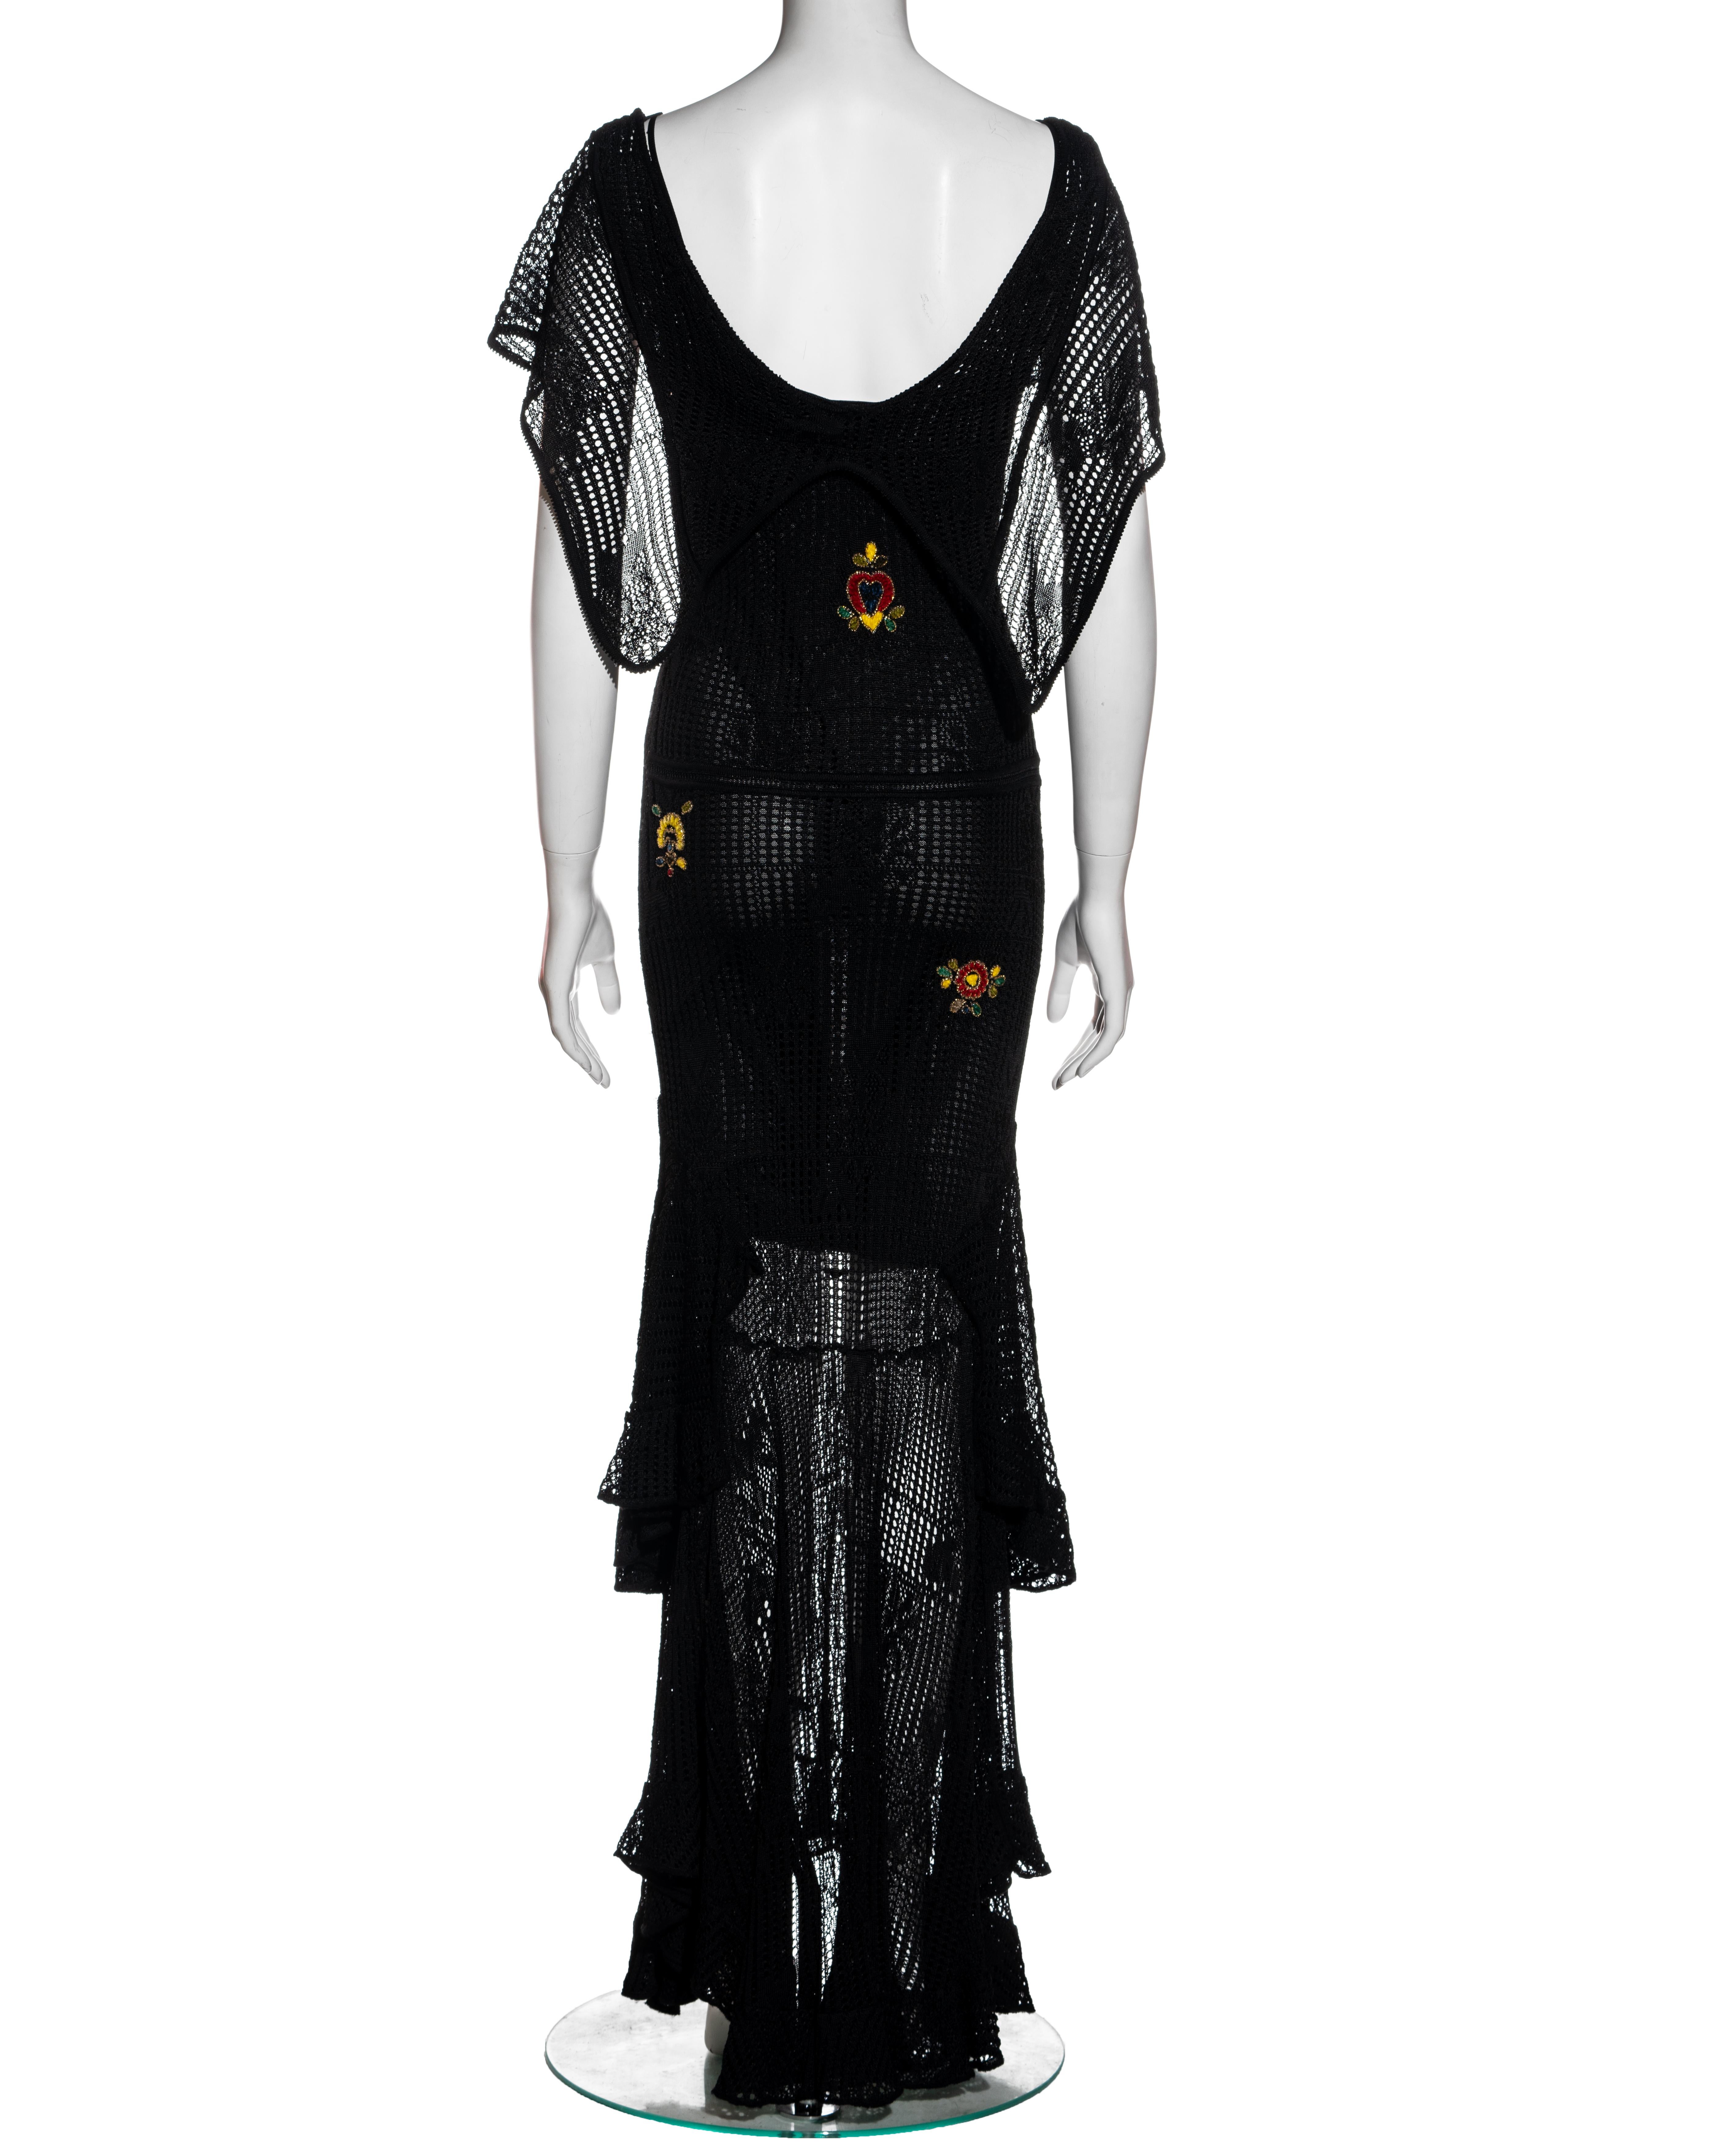 Women's Christian Dior by John Galliano black crochet maxi dress, fw 2001